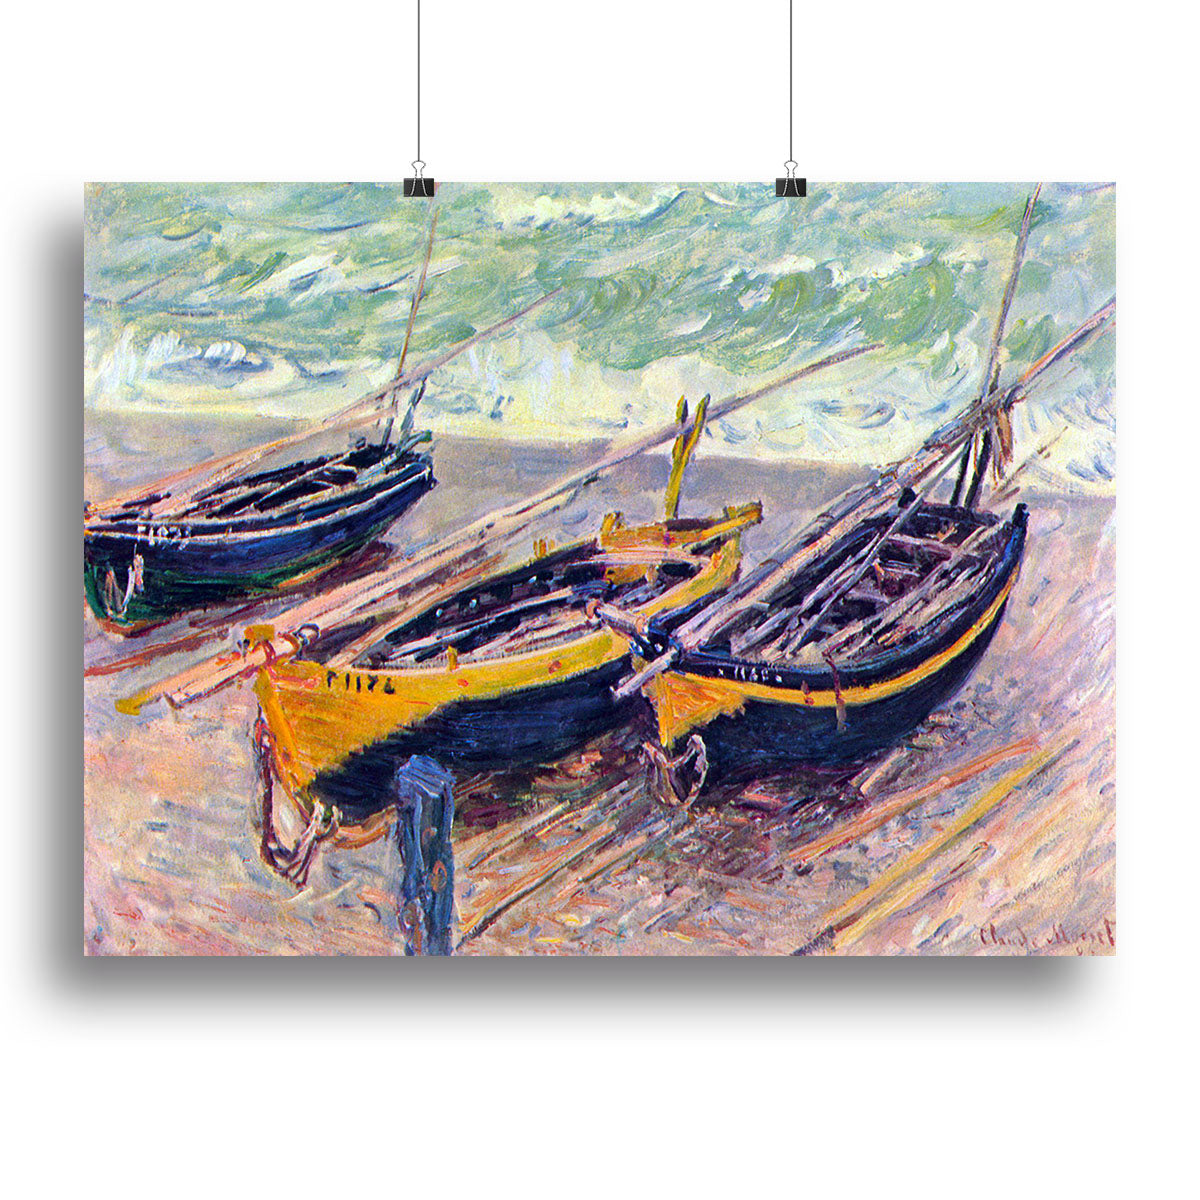 Dock of etretat three fishing boats by Monet Canvas Print or Poster - Canvas Art Rocks - 2